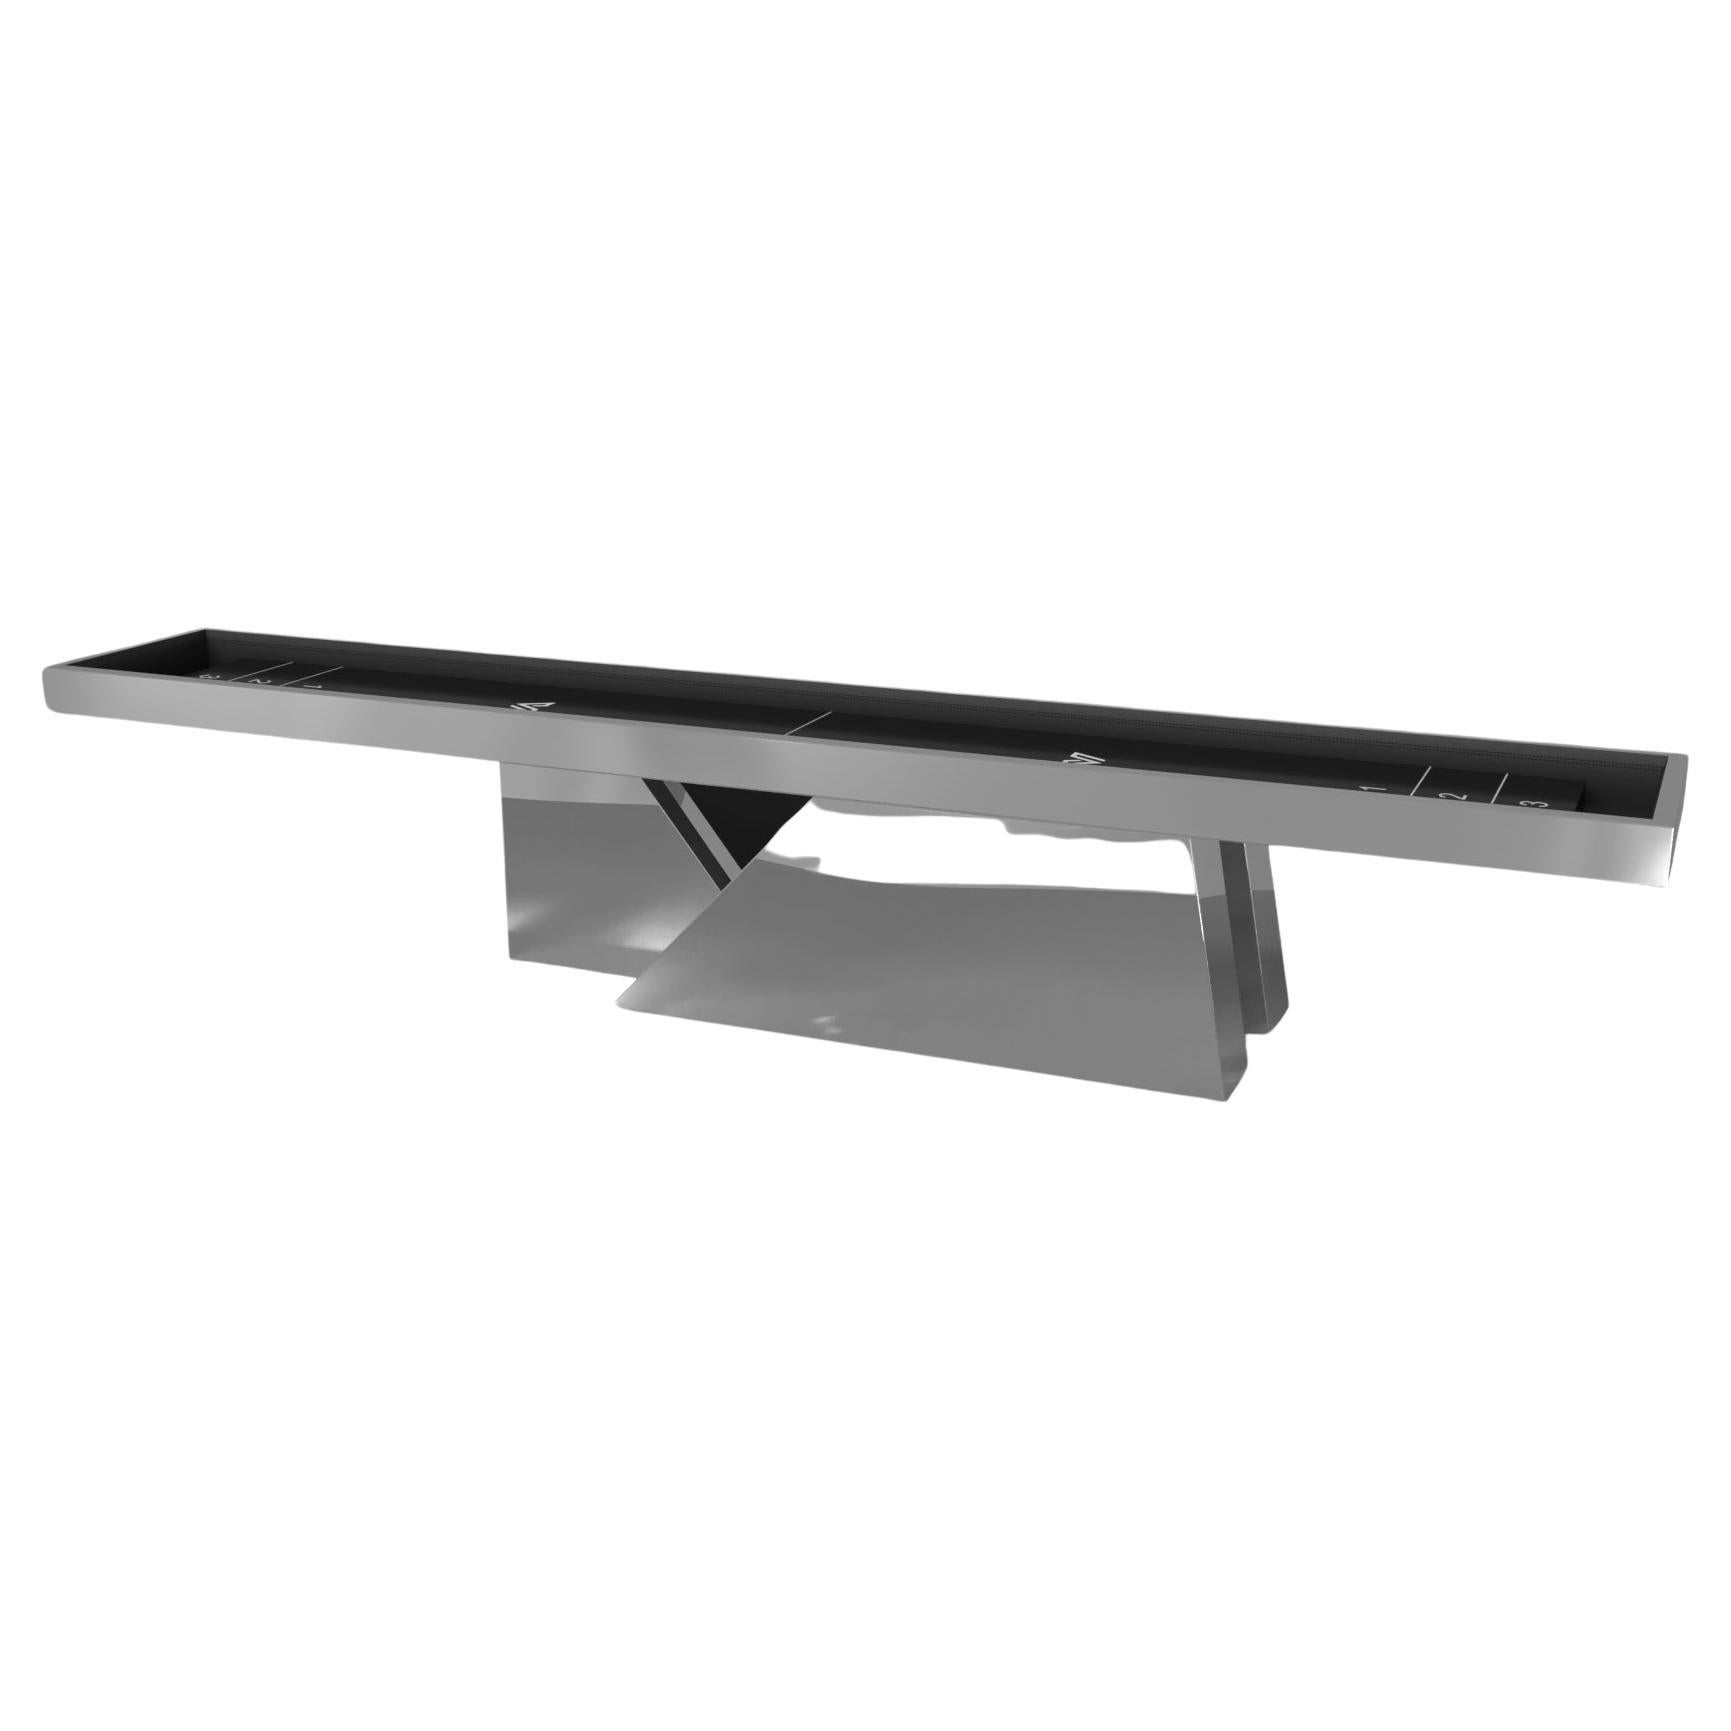 Elevate Customs Stilt Shuffleboard Tables/Stainless Steel Sheet Metal in 9' -USA For Sale